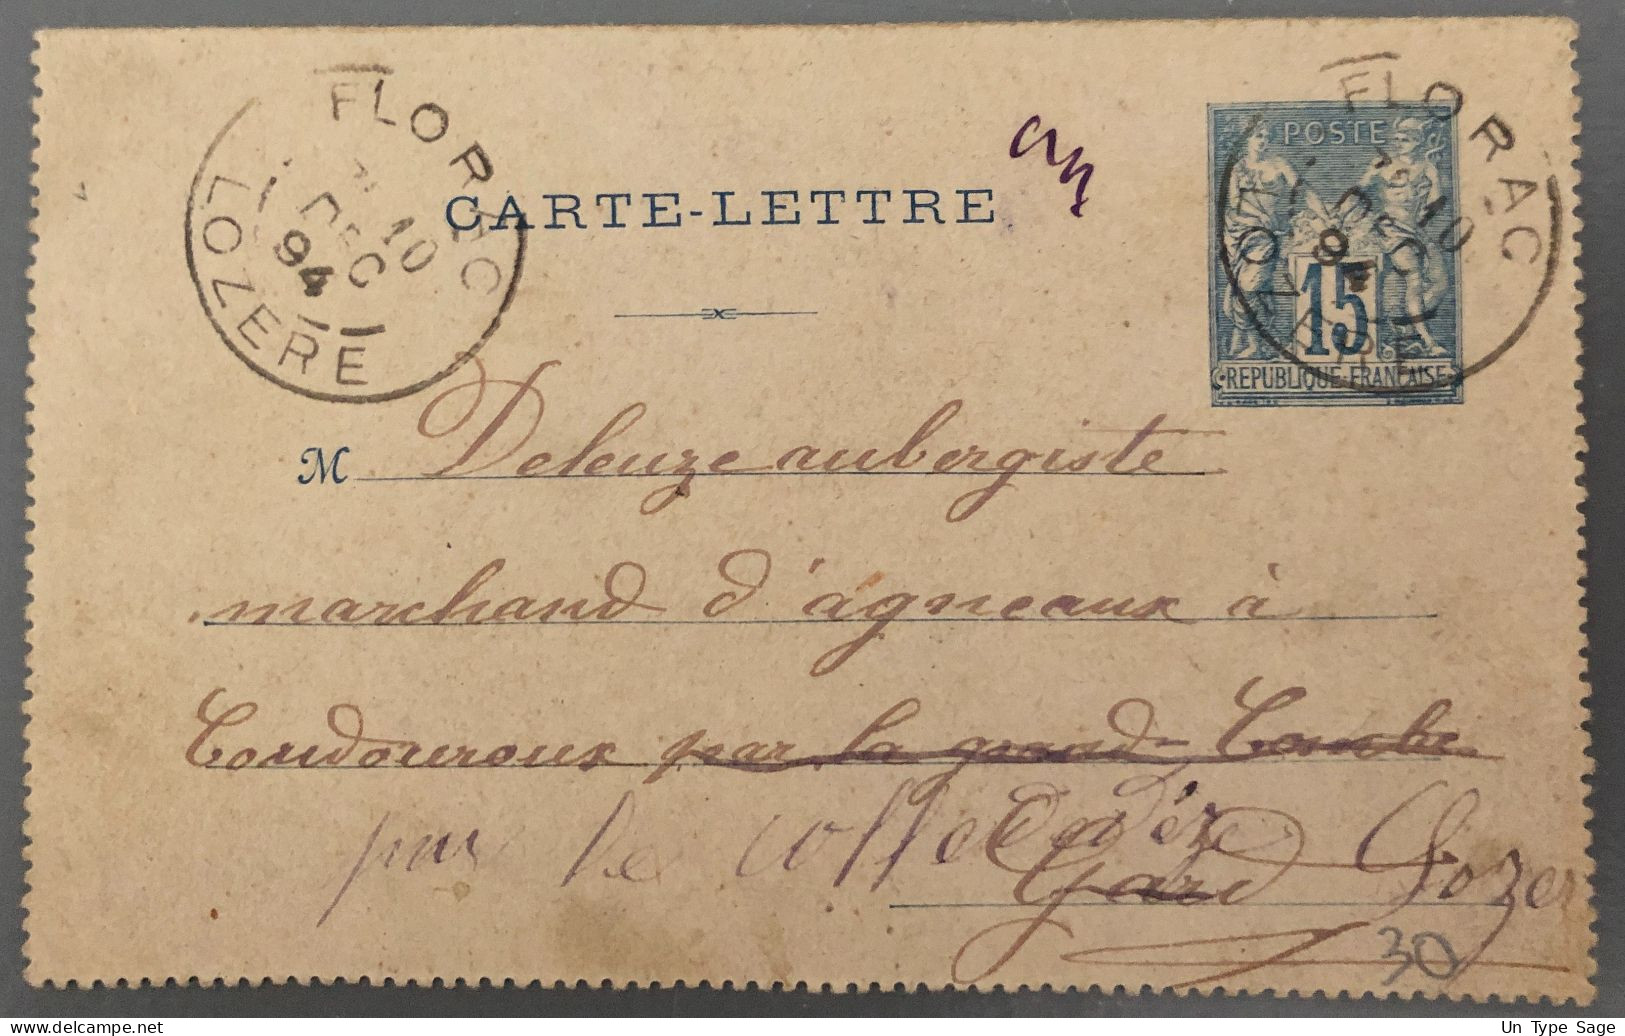 France Entier Type Sage 15c. - Carte Lettre - (B1992) - Newspaper Bands